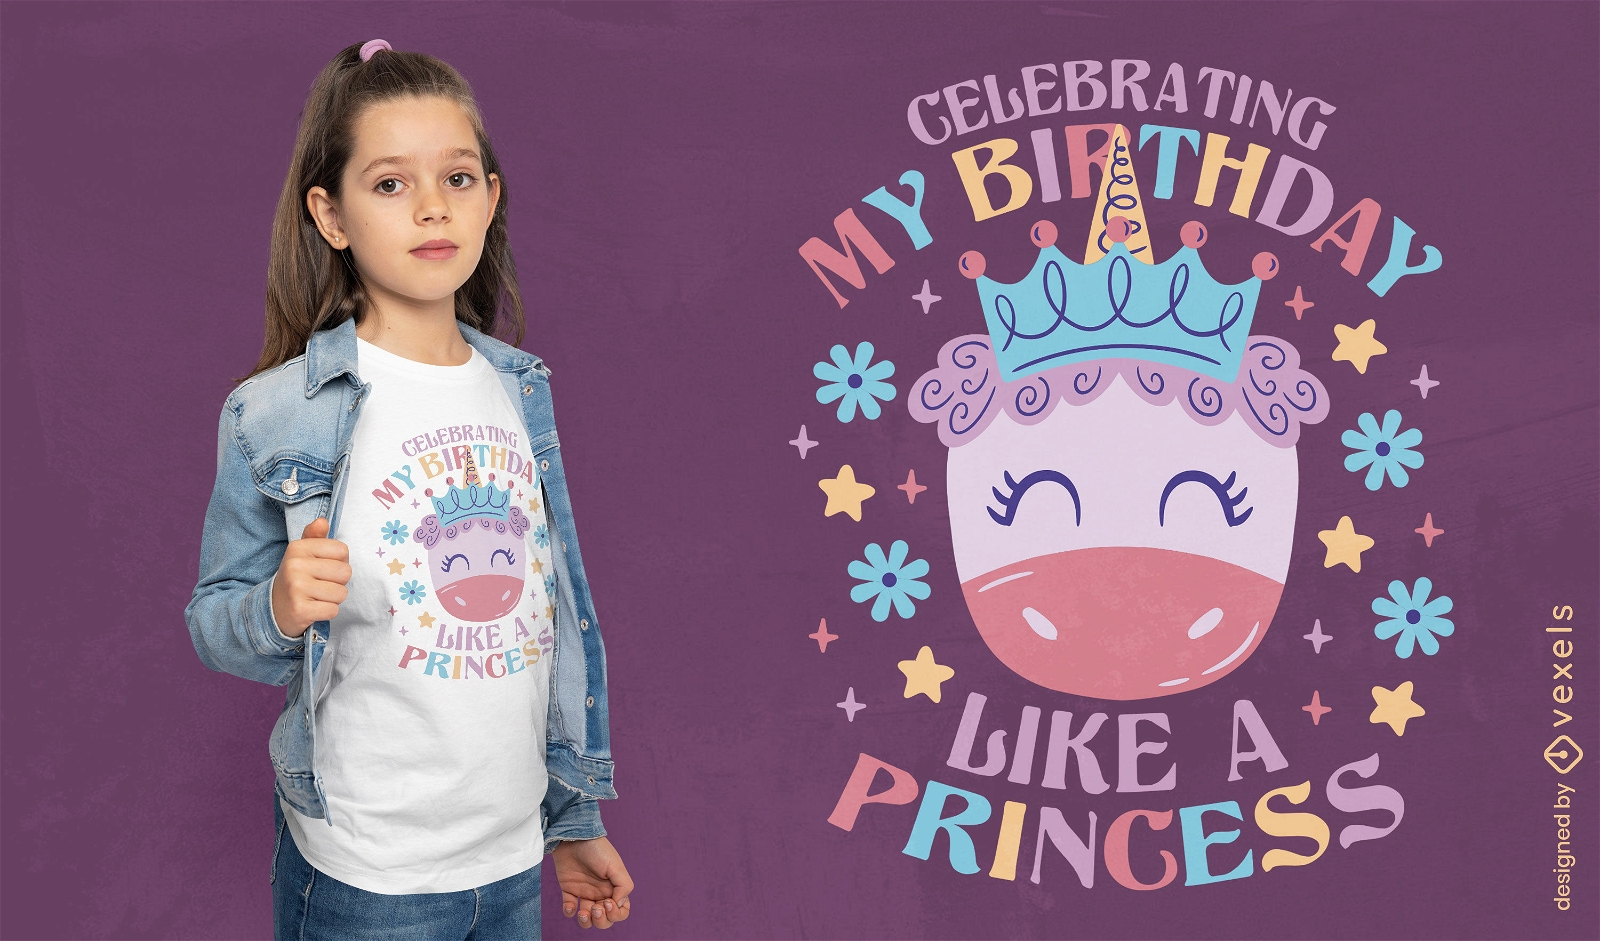 Princess birthday celebration t-shirt design